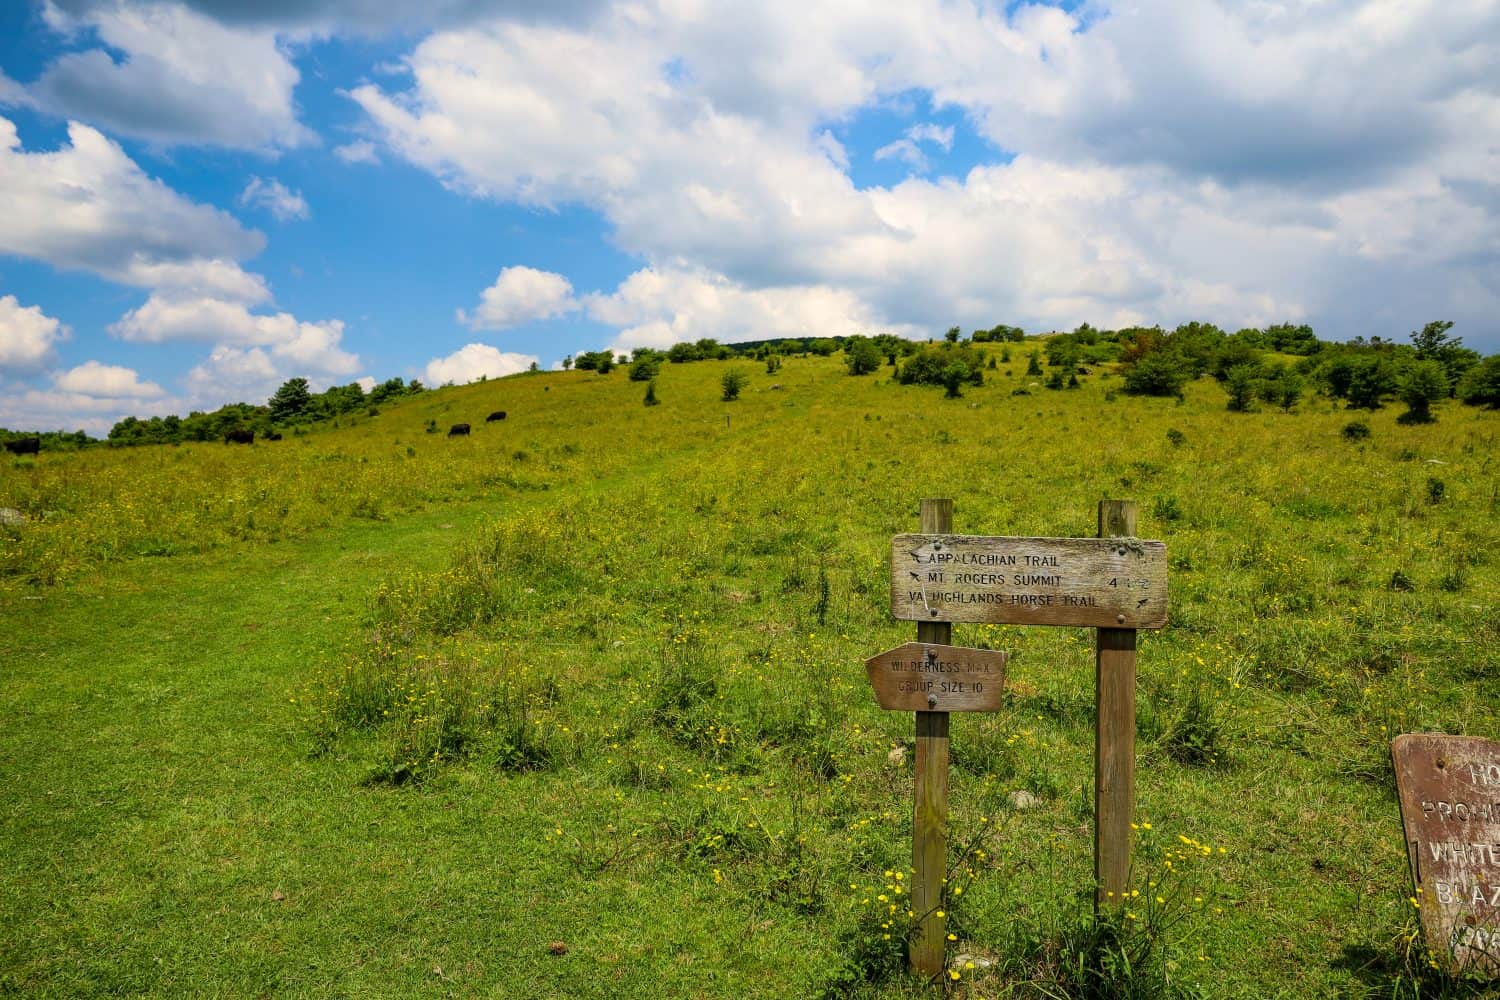 Appalachian Trail sign in Mount Rogers, Virginia